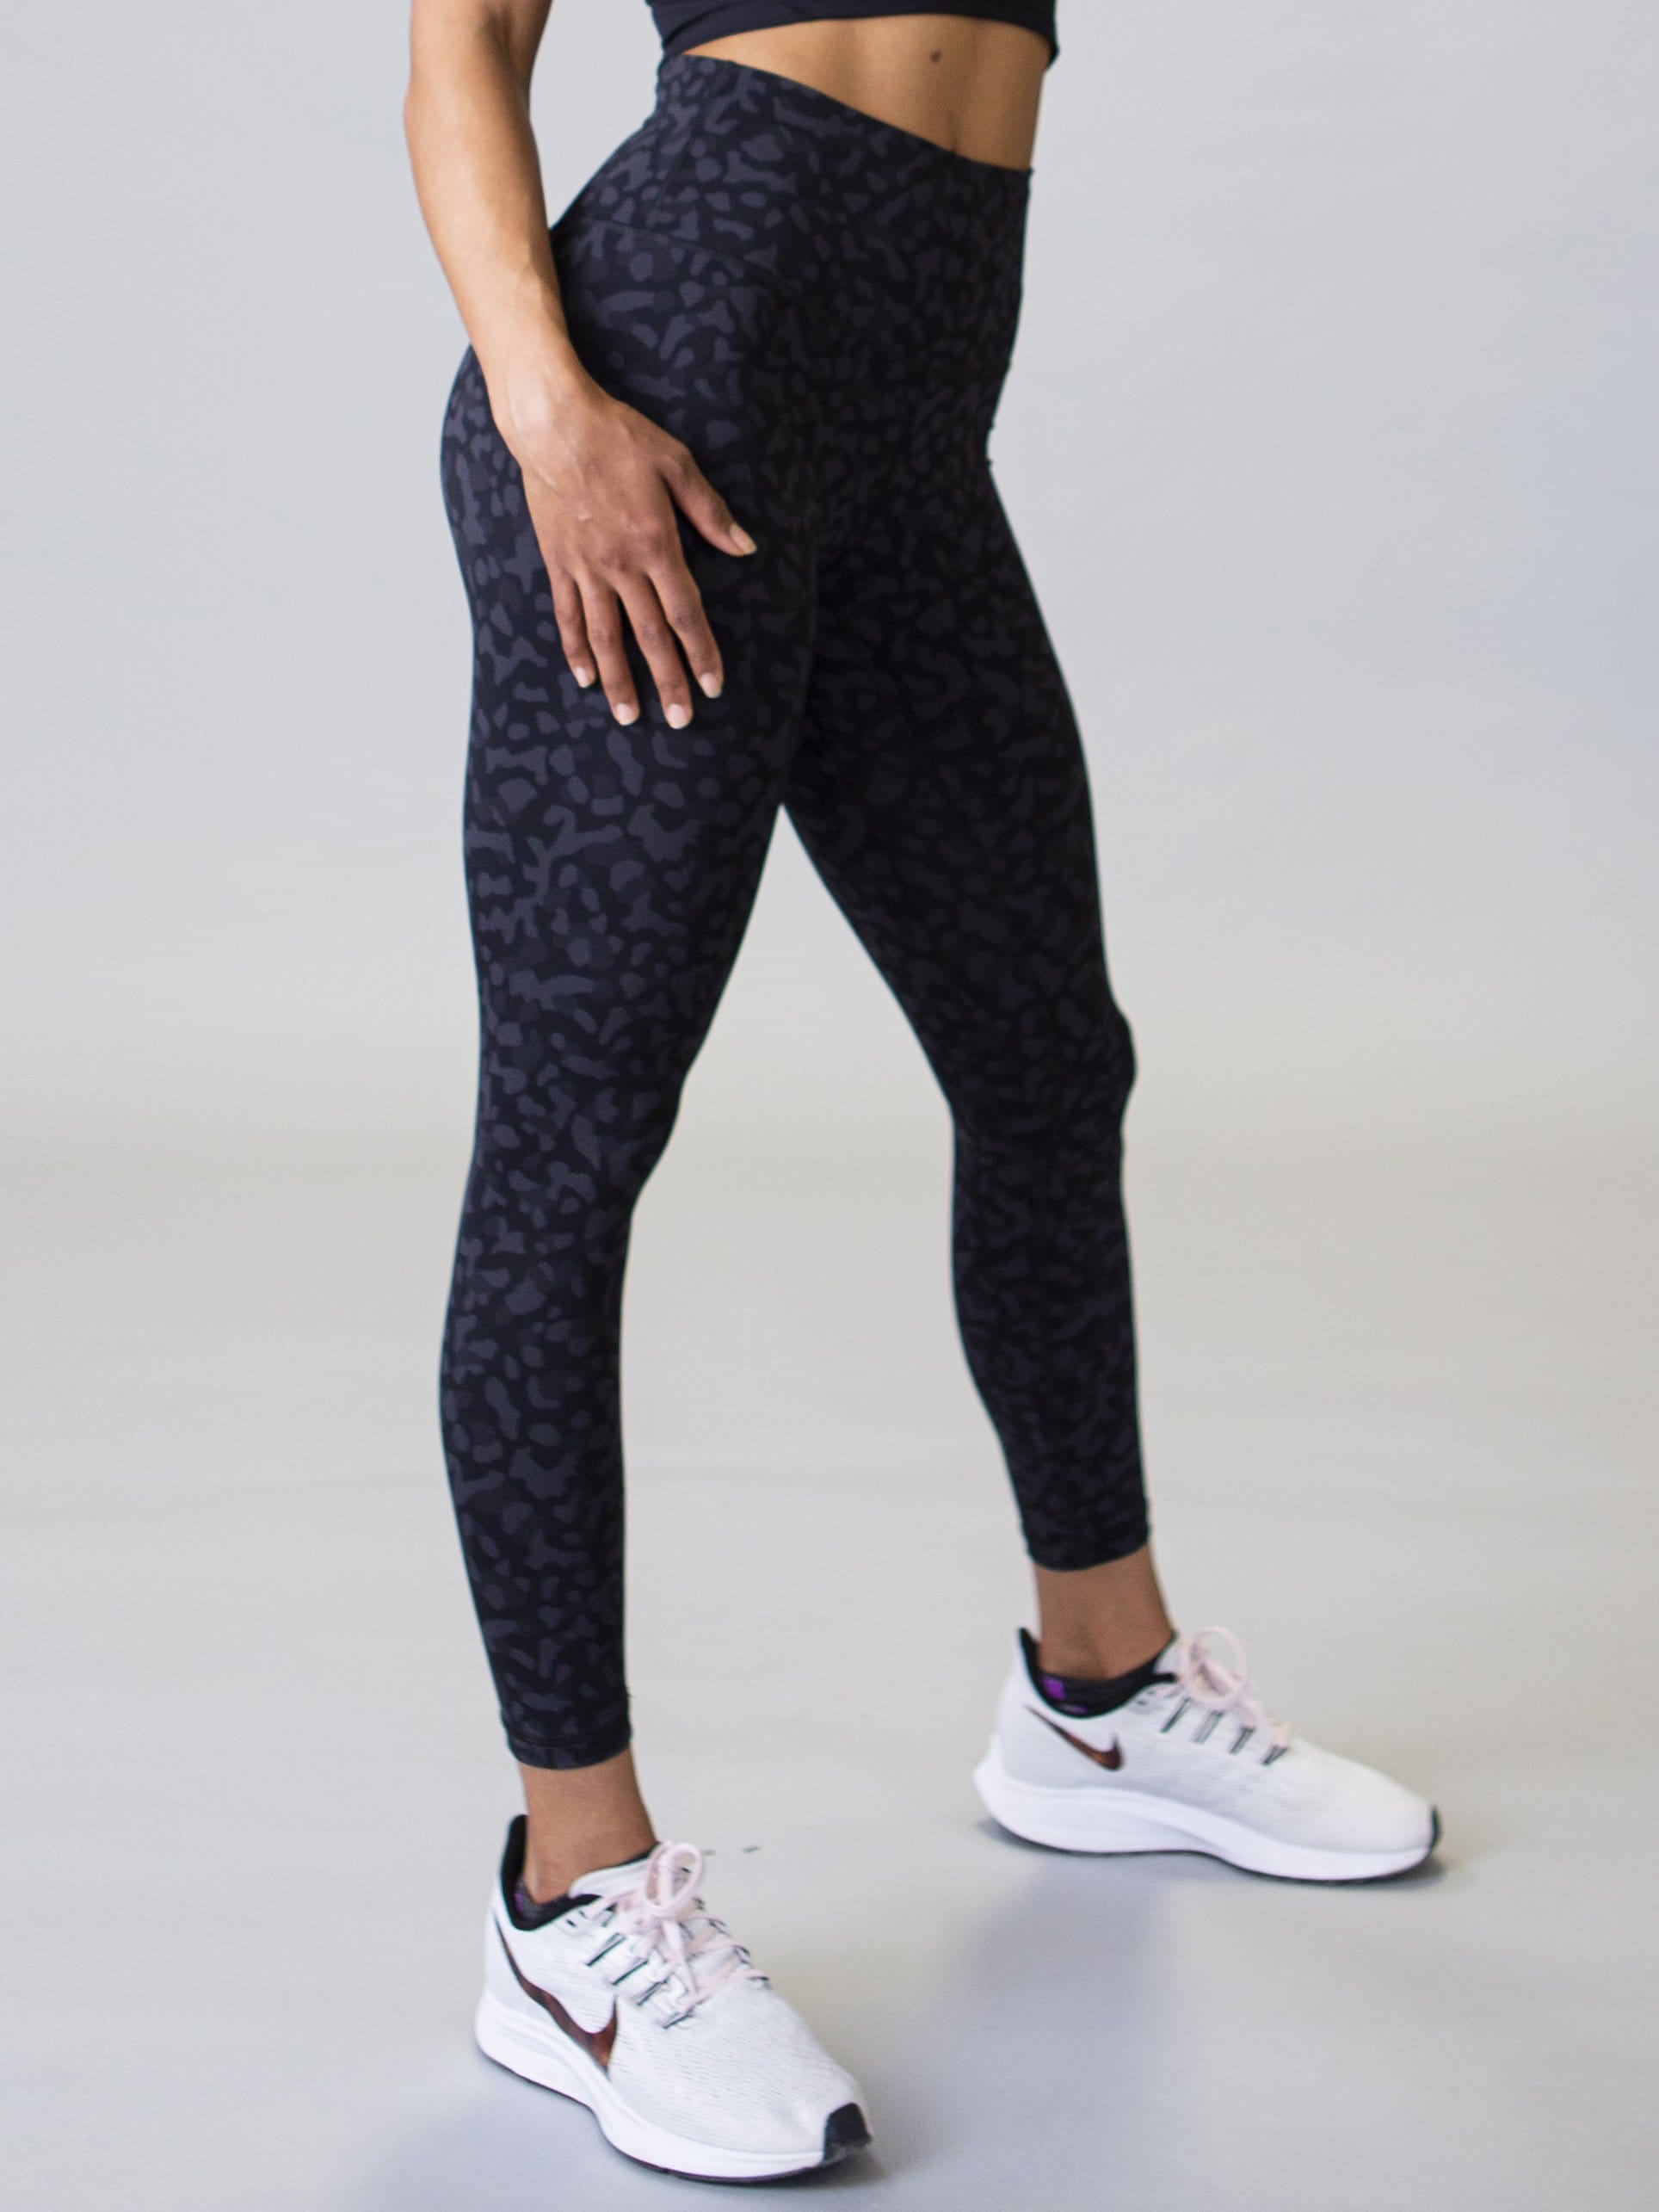 ZUTY 7/8 Workout Leggings Black Leopard High Waisted Yoga Ankle Pockets  Squat L | eBay